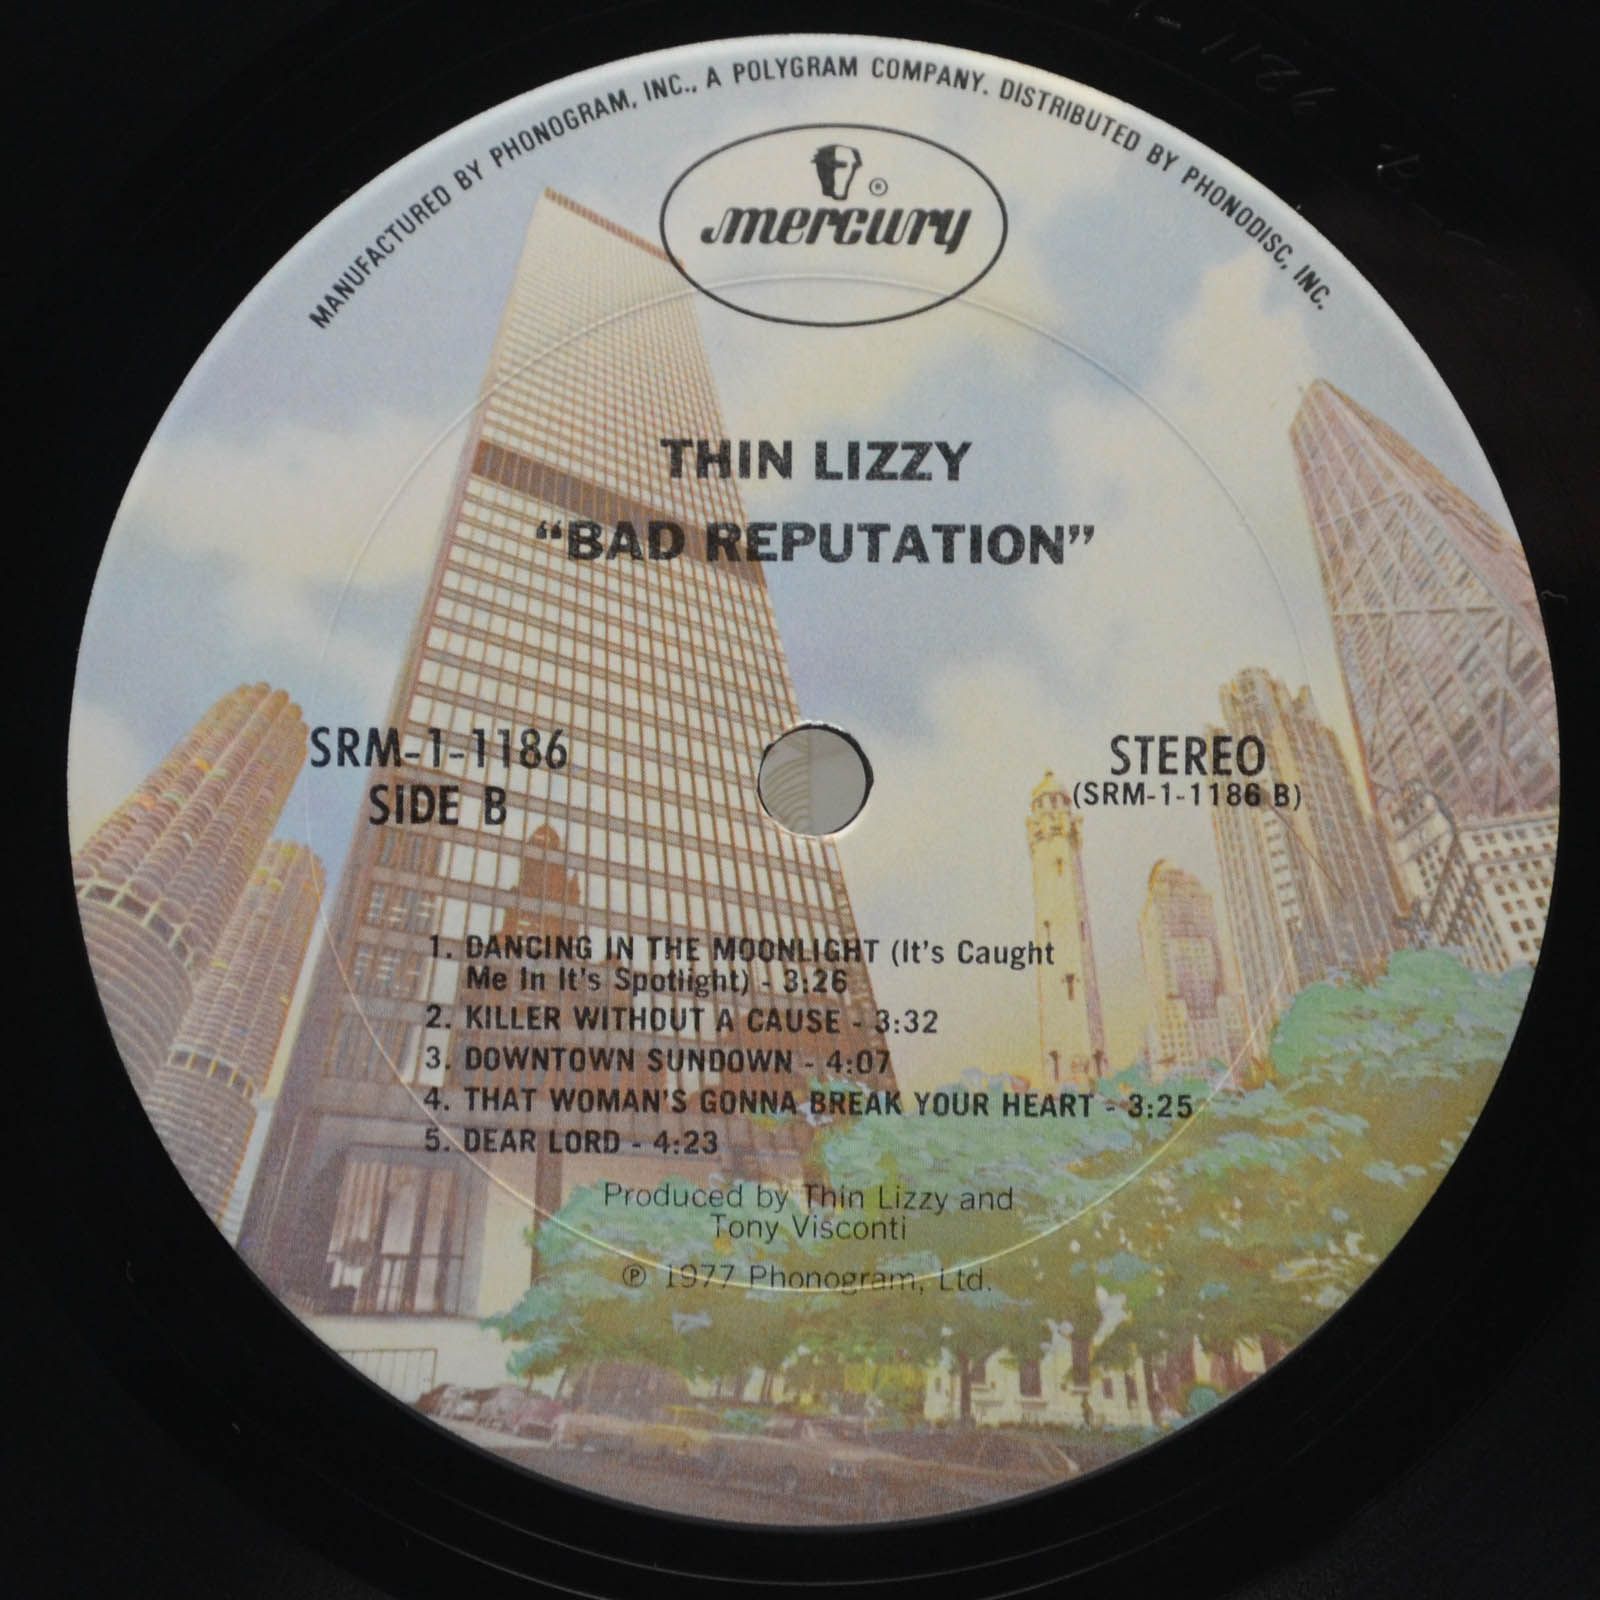 Thin Lizzy — Bad Reputation (USA), 1977